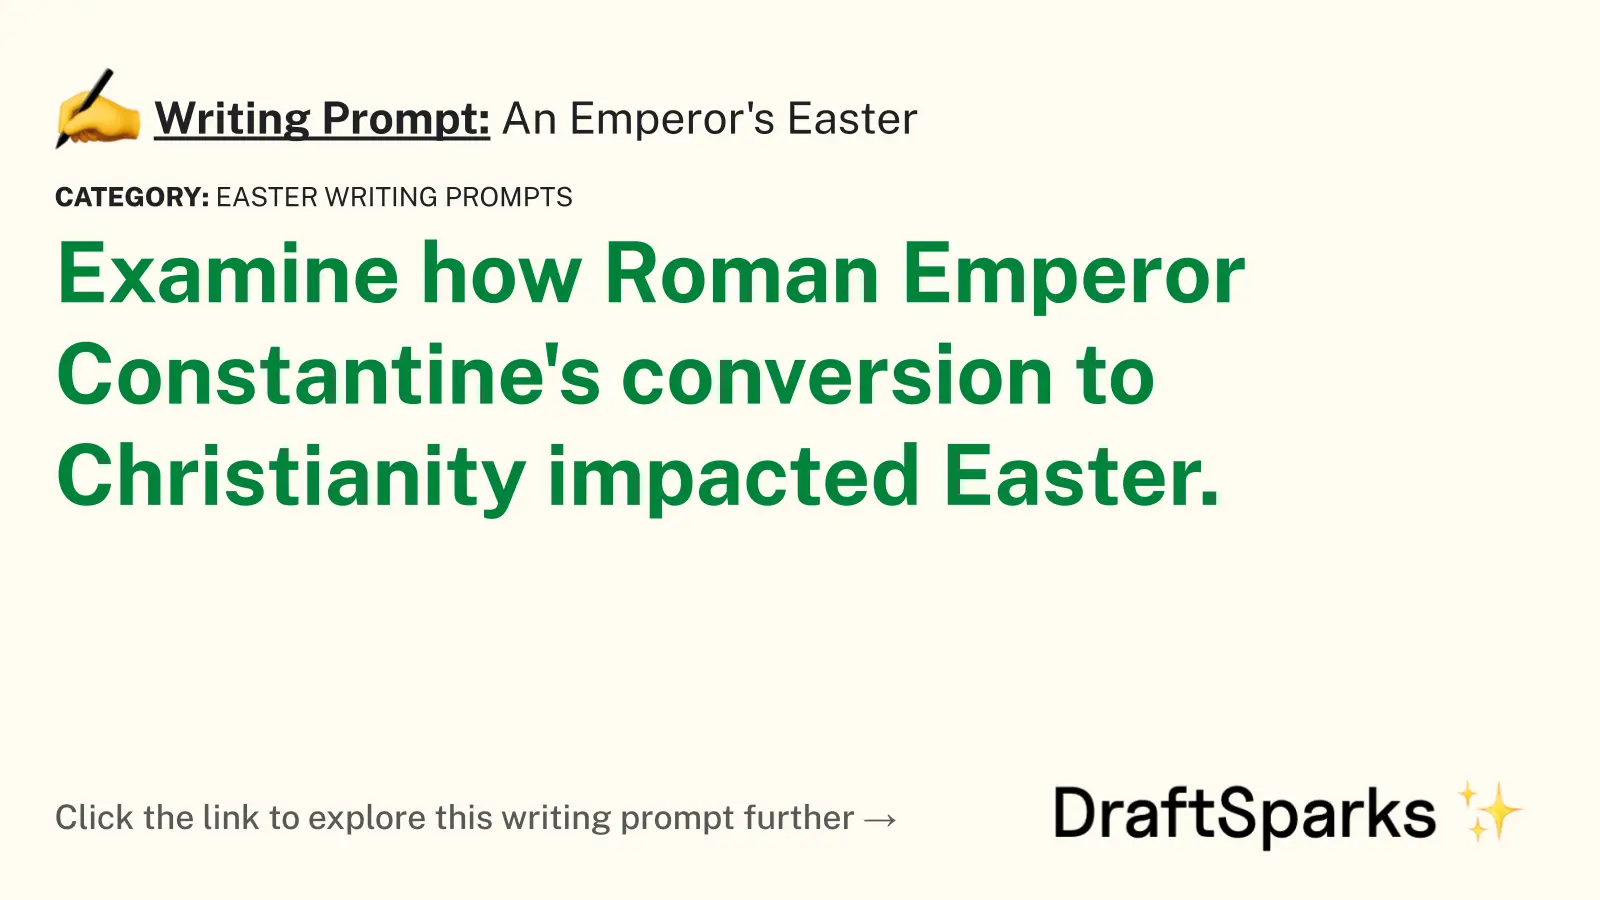 An Emperor’s Easter